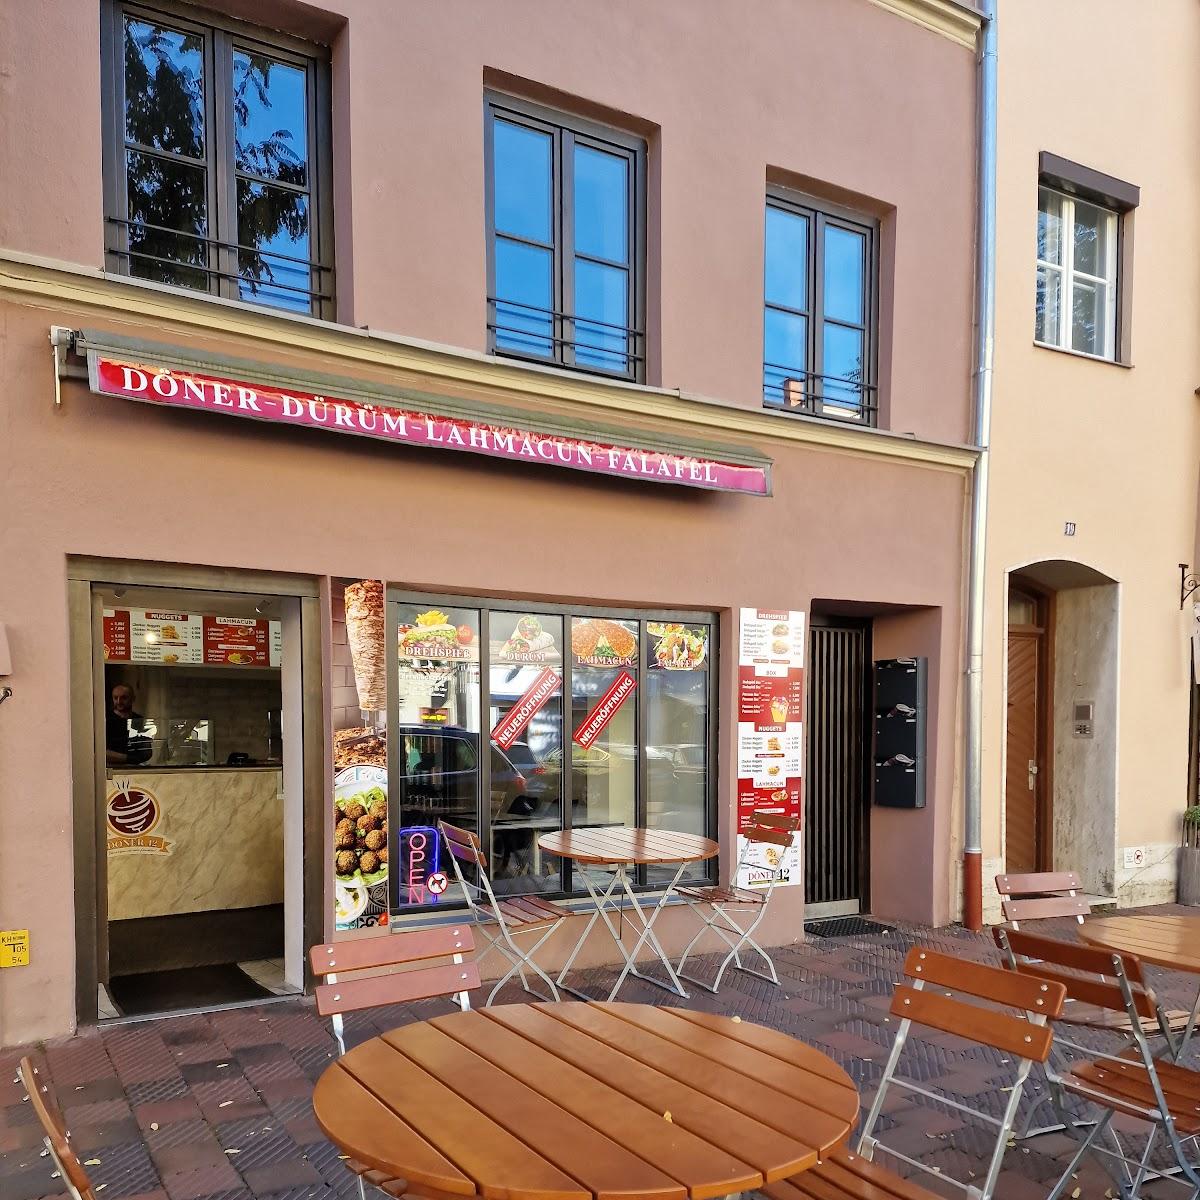 Restaurant "Döner42" in Wasserburg am Inn